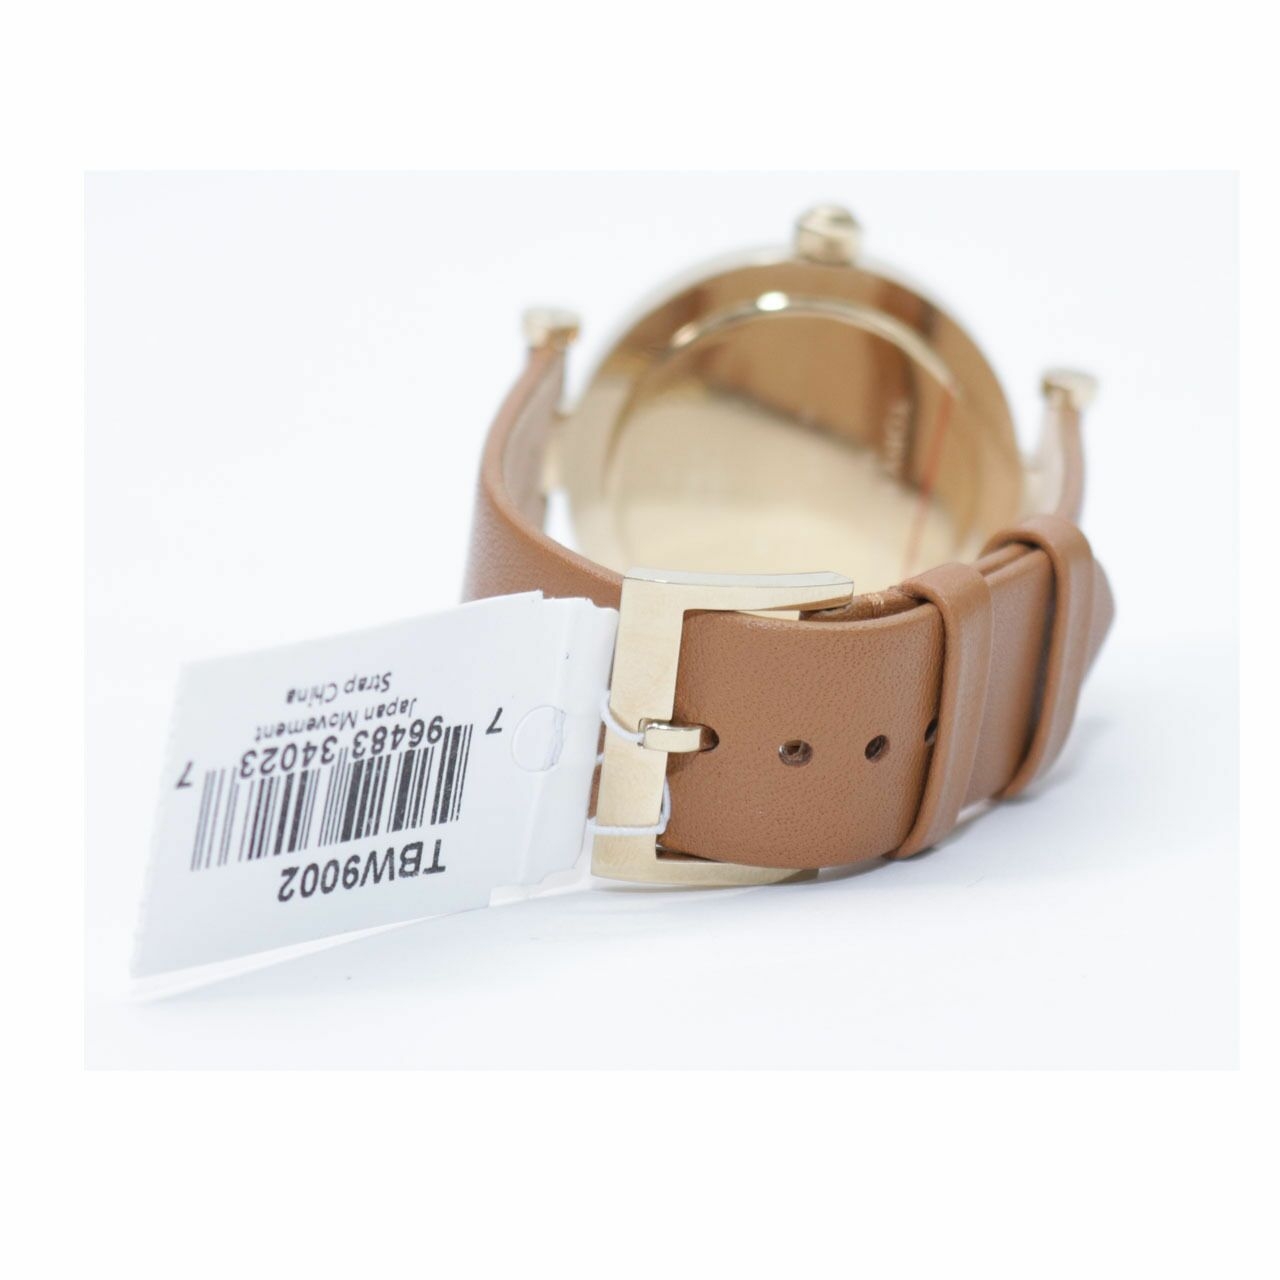 Tory Burch T Watch Khaki Leather Gold Tone 35mm Wrist Watch